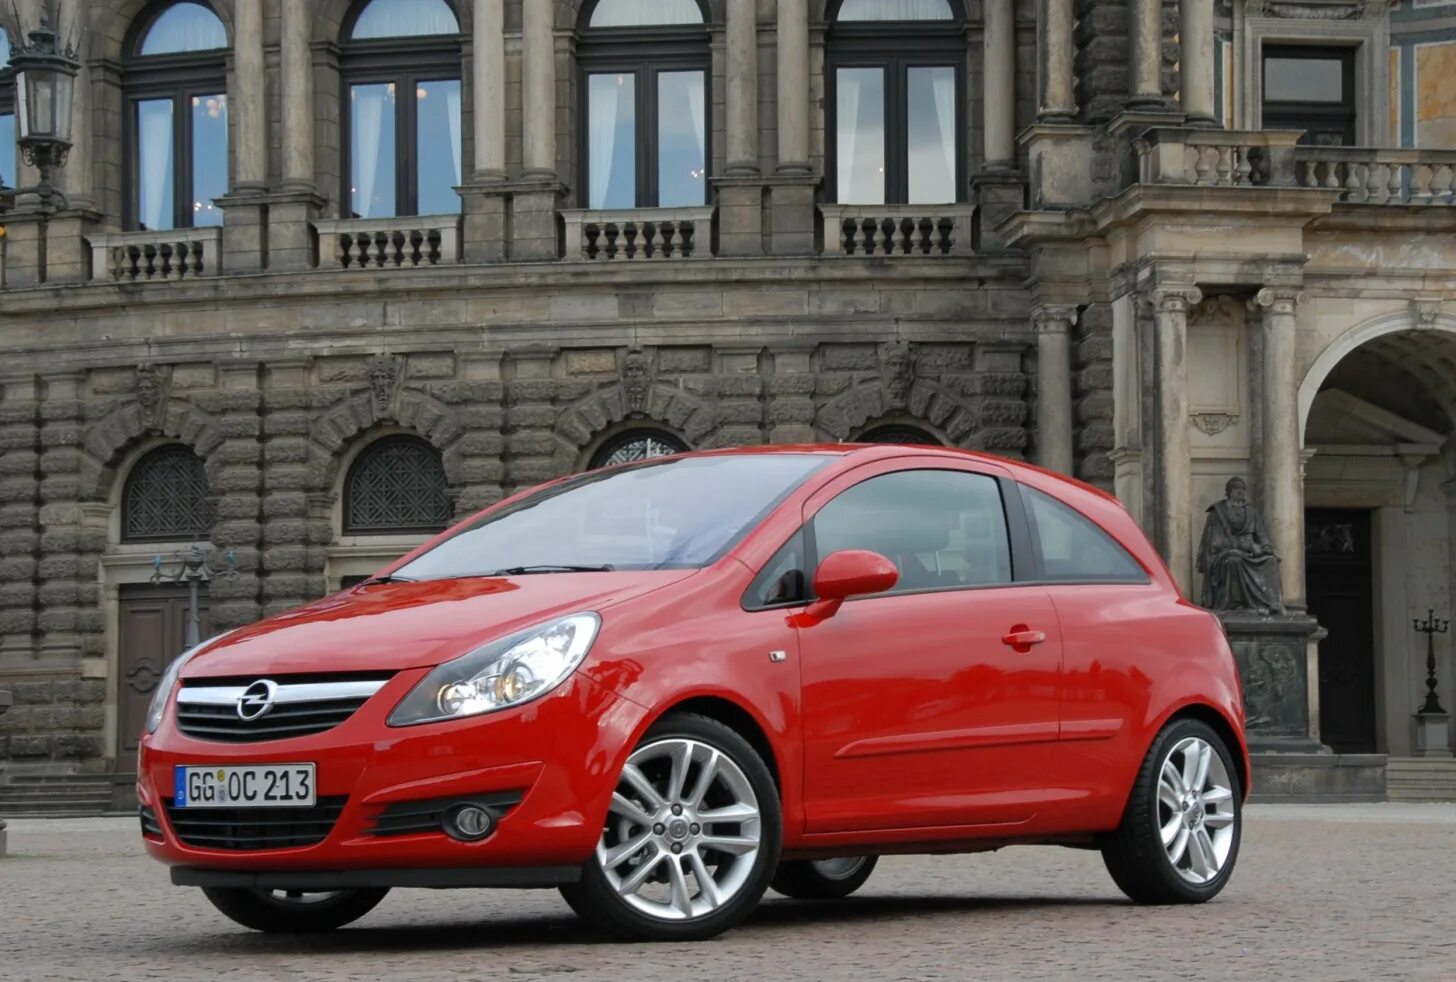 Opel Corsa 2006. Opel Corsa 2014. Опель Корса 2006 года. Opel Corsa 2006 - 2014. Купить опель в польше